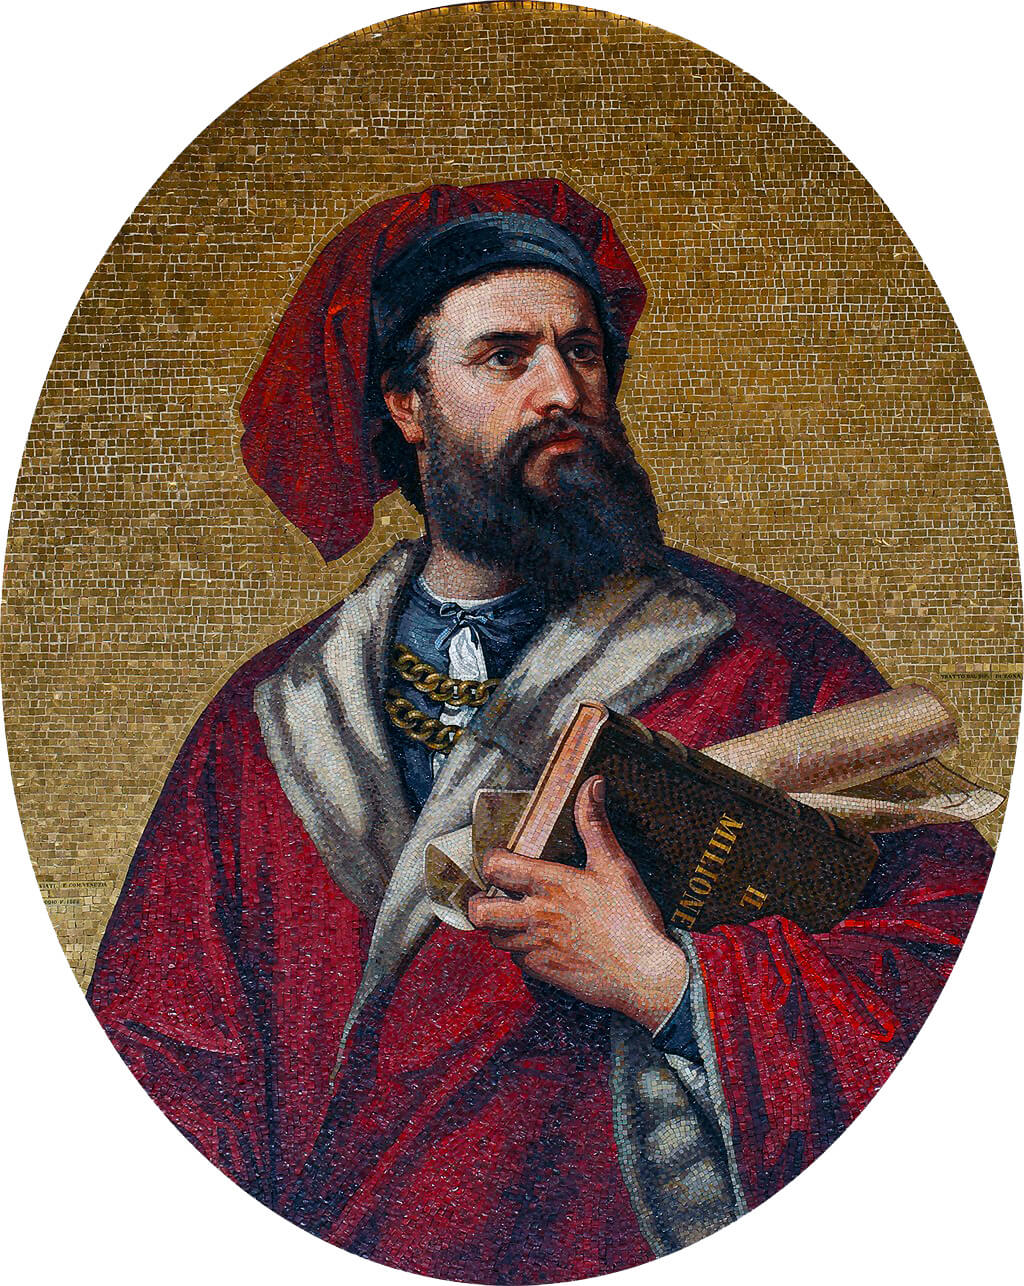 Marco Polo Portrait